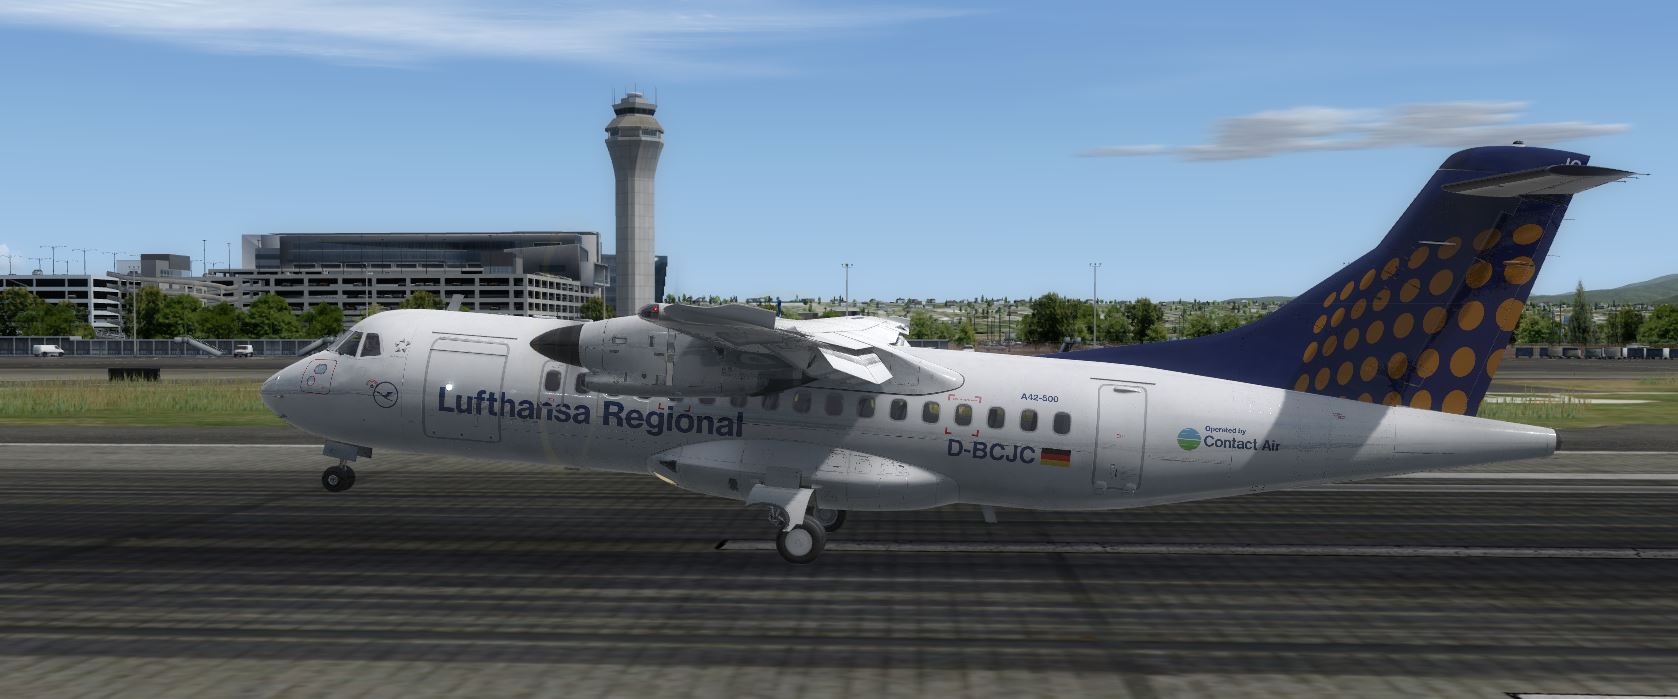 ATR42-500 Lufthansa-401 